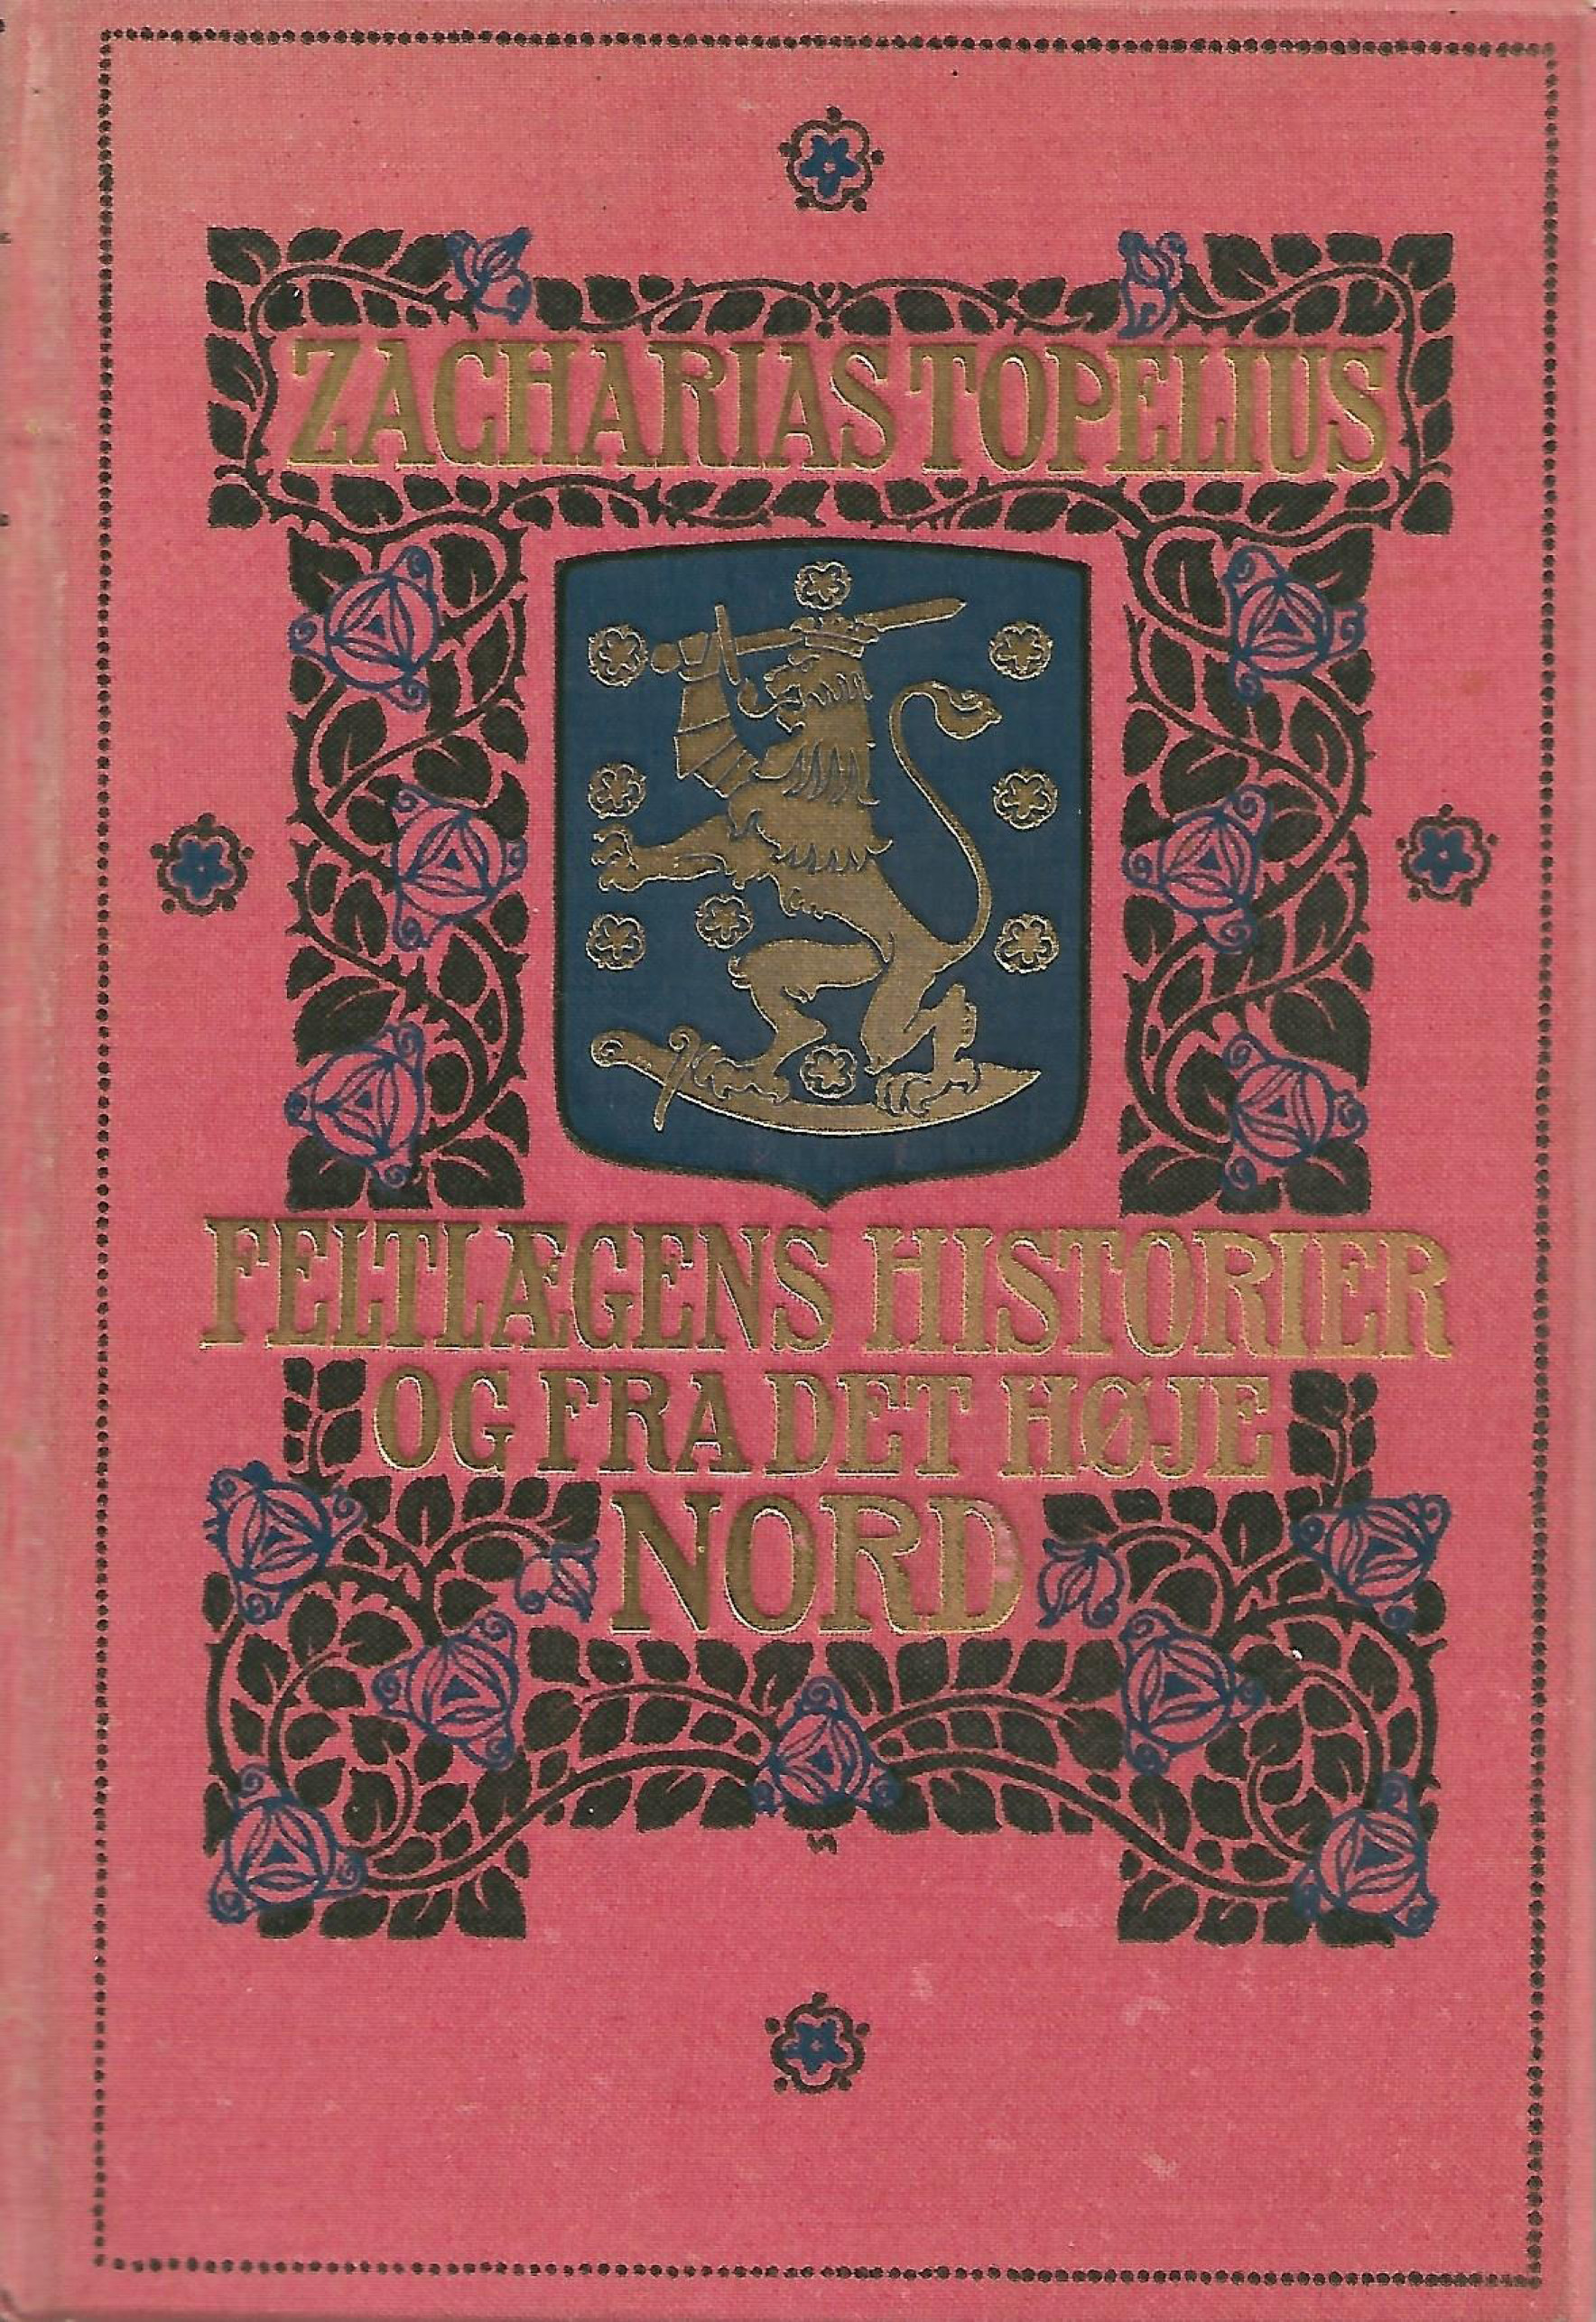 Feltlægens Historier - Gustav Adolf og Trediveaarskrigen - Zacharias T